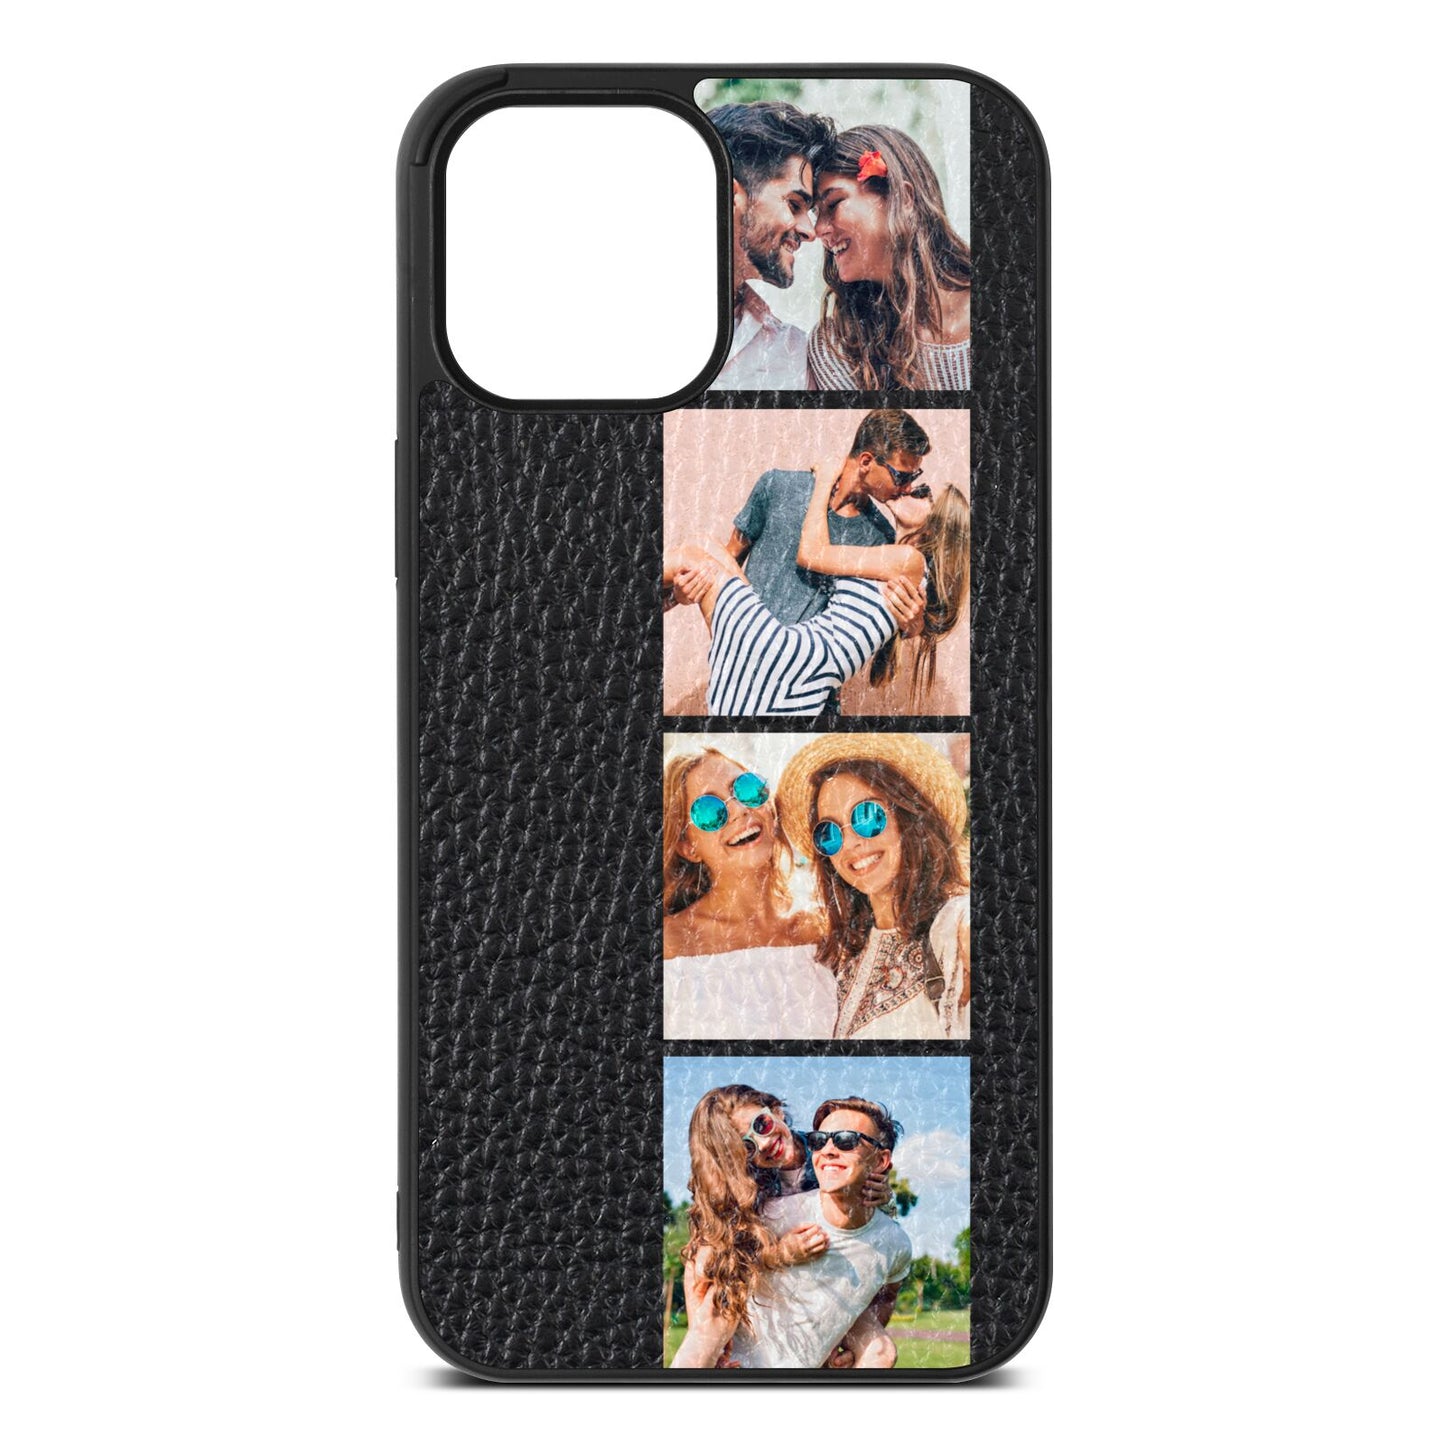 Photo Strip Montage Upload Black Pebble Leather iPhone 12 Pro Max Case